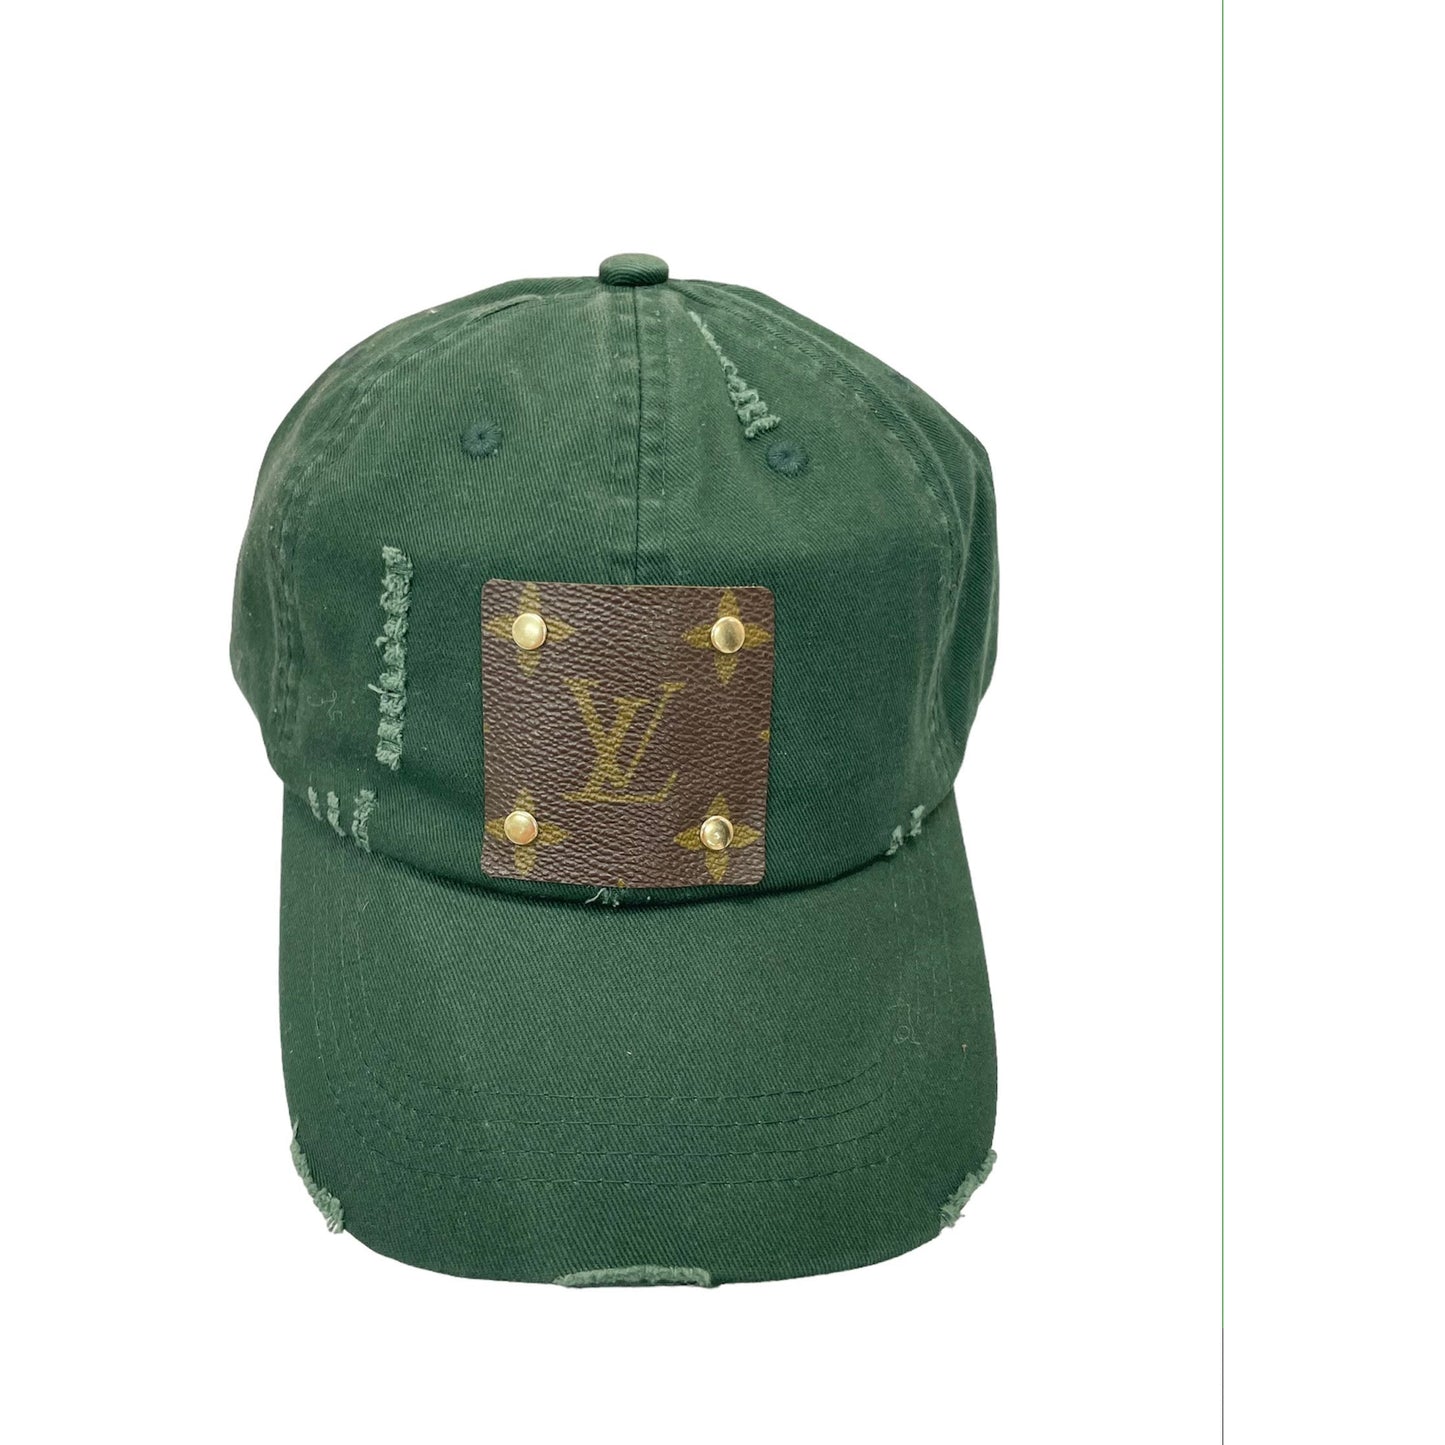 Authentic Repurposed Baseball Hat